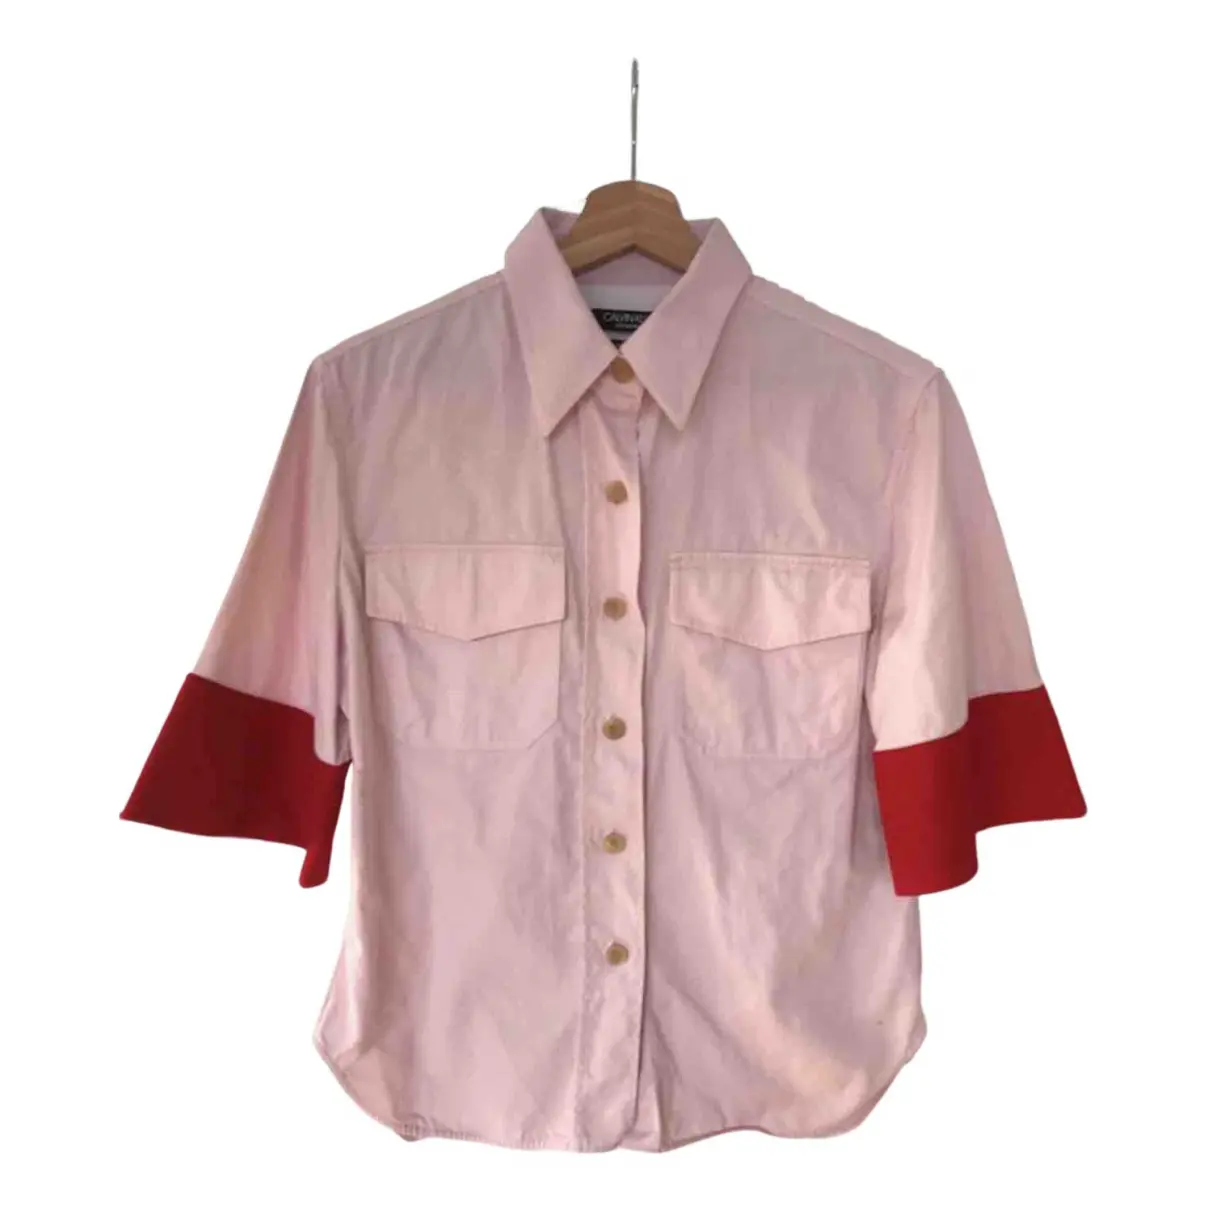 Buy Calvin Klein 205W39NYC Pink Cotton Top online